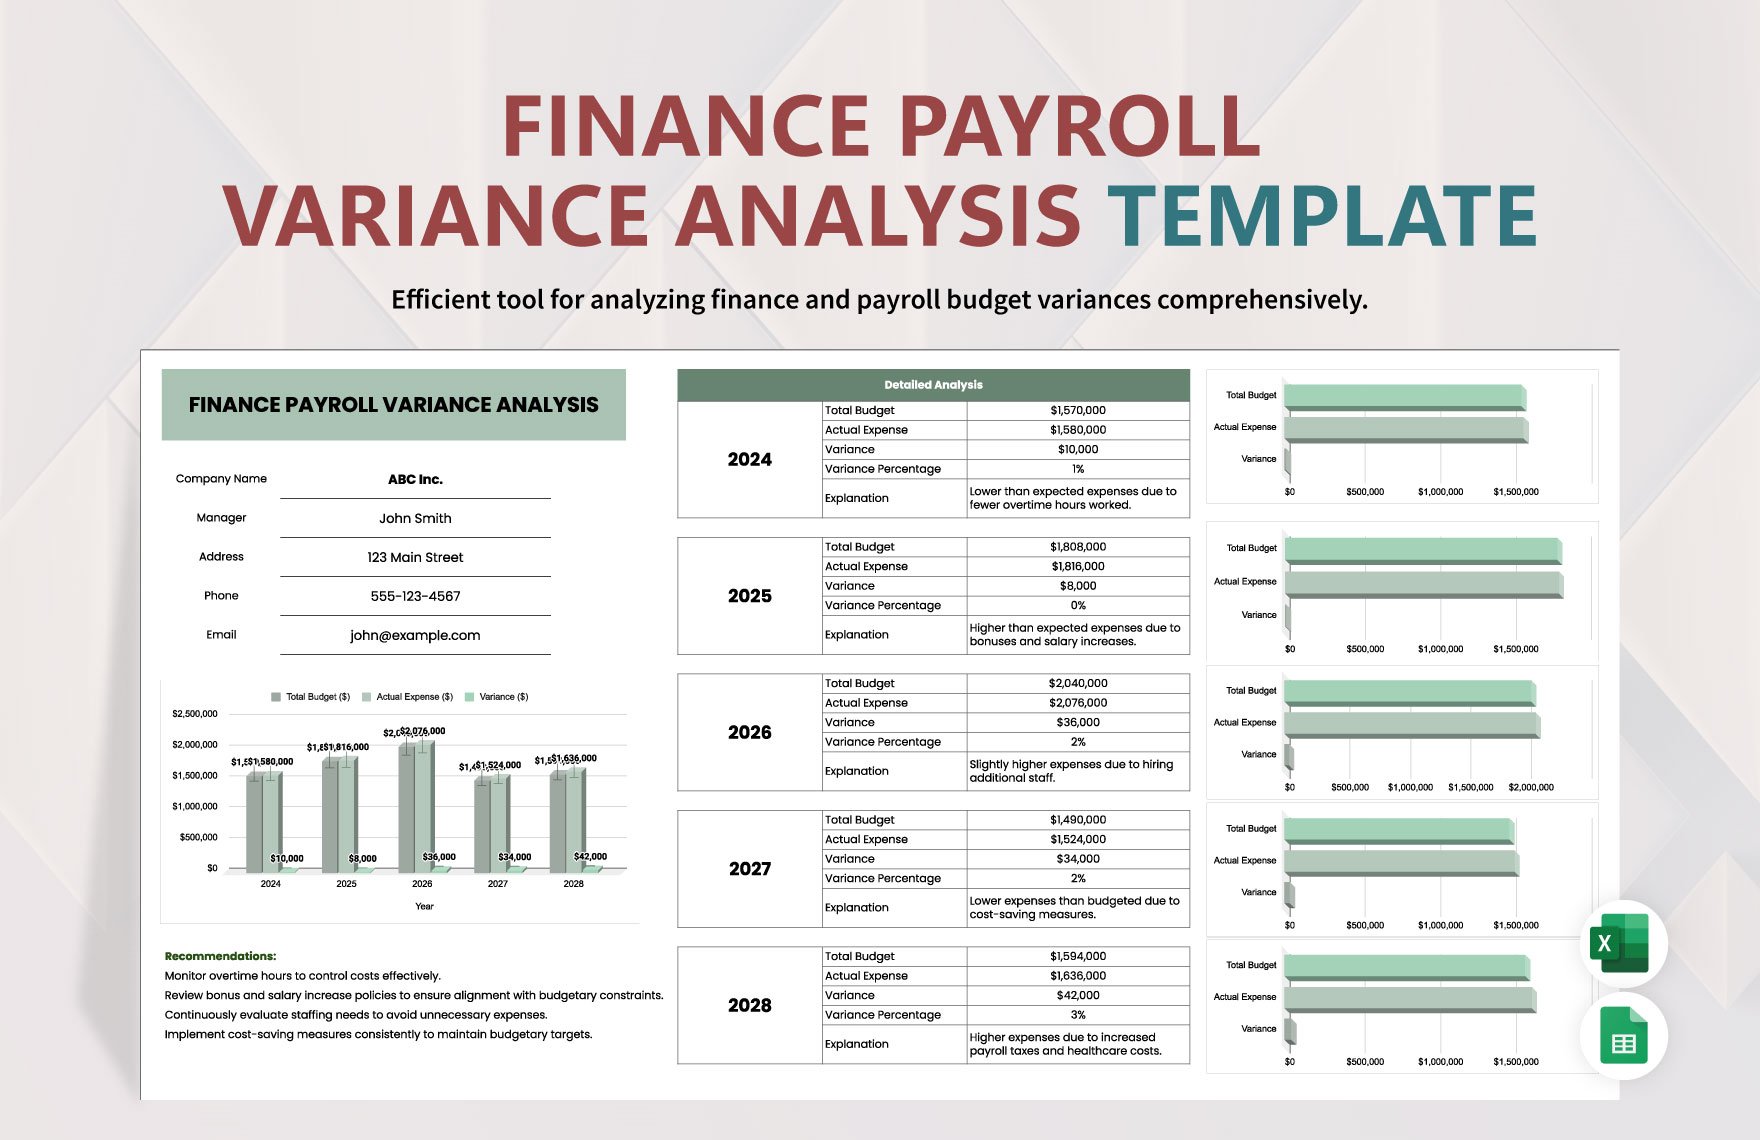 Finance Payroll Variance Analysis Template